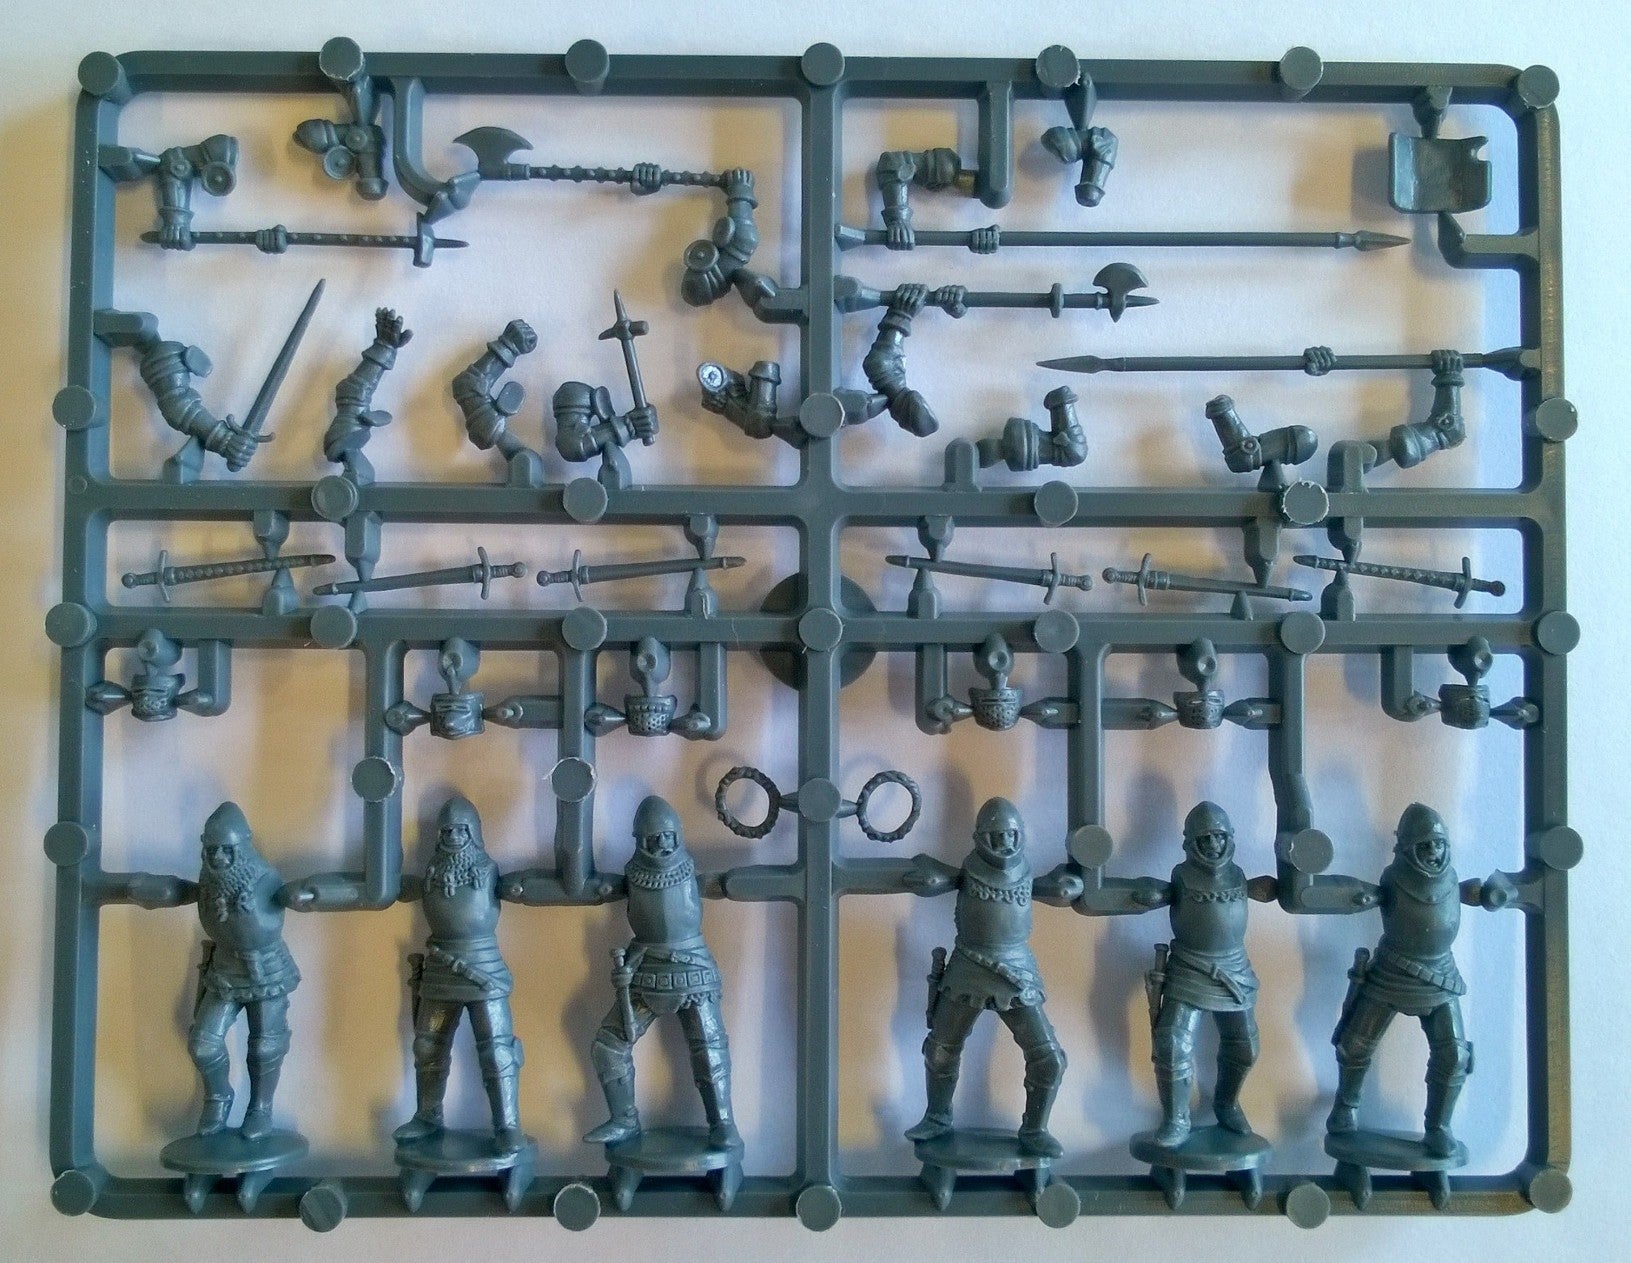 Agincourt French Infantry Sprue Perry Miniatures - Spruedude